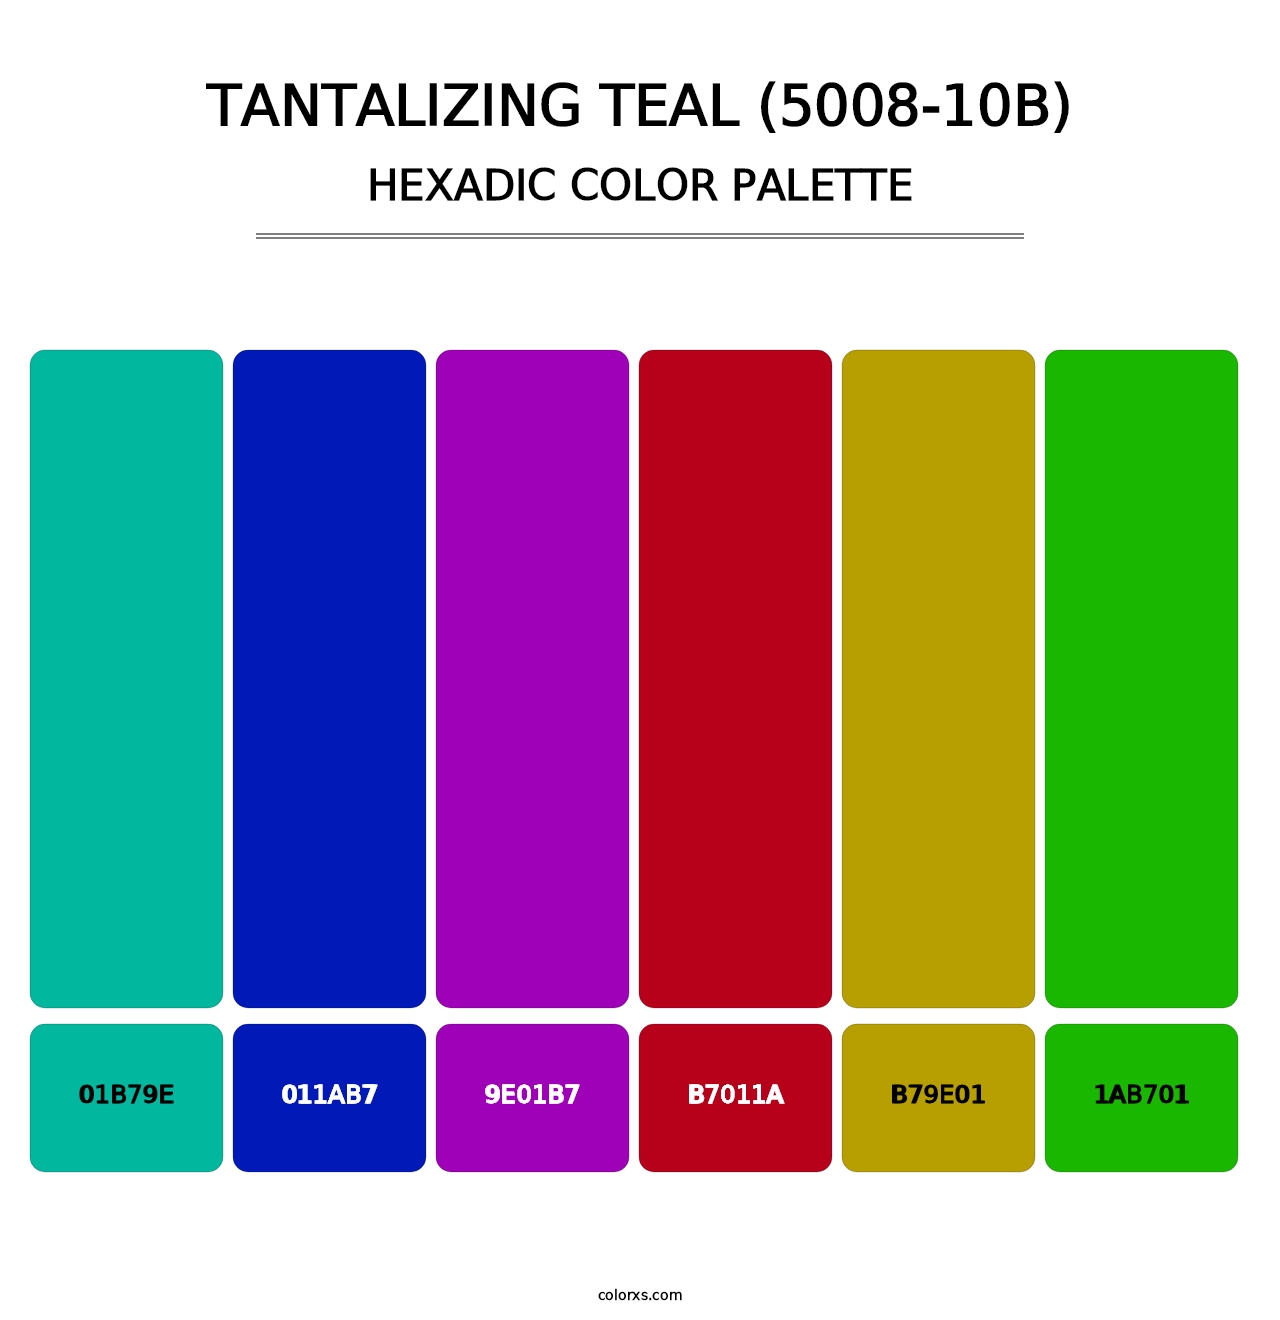 Tantalizing Teal (5008-10B) - Hexadic Color Palette